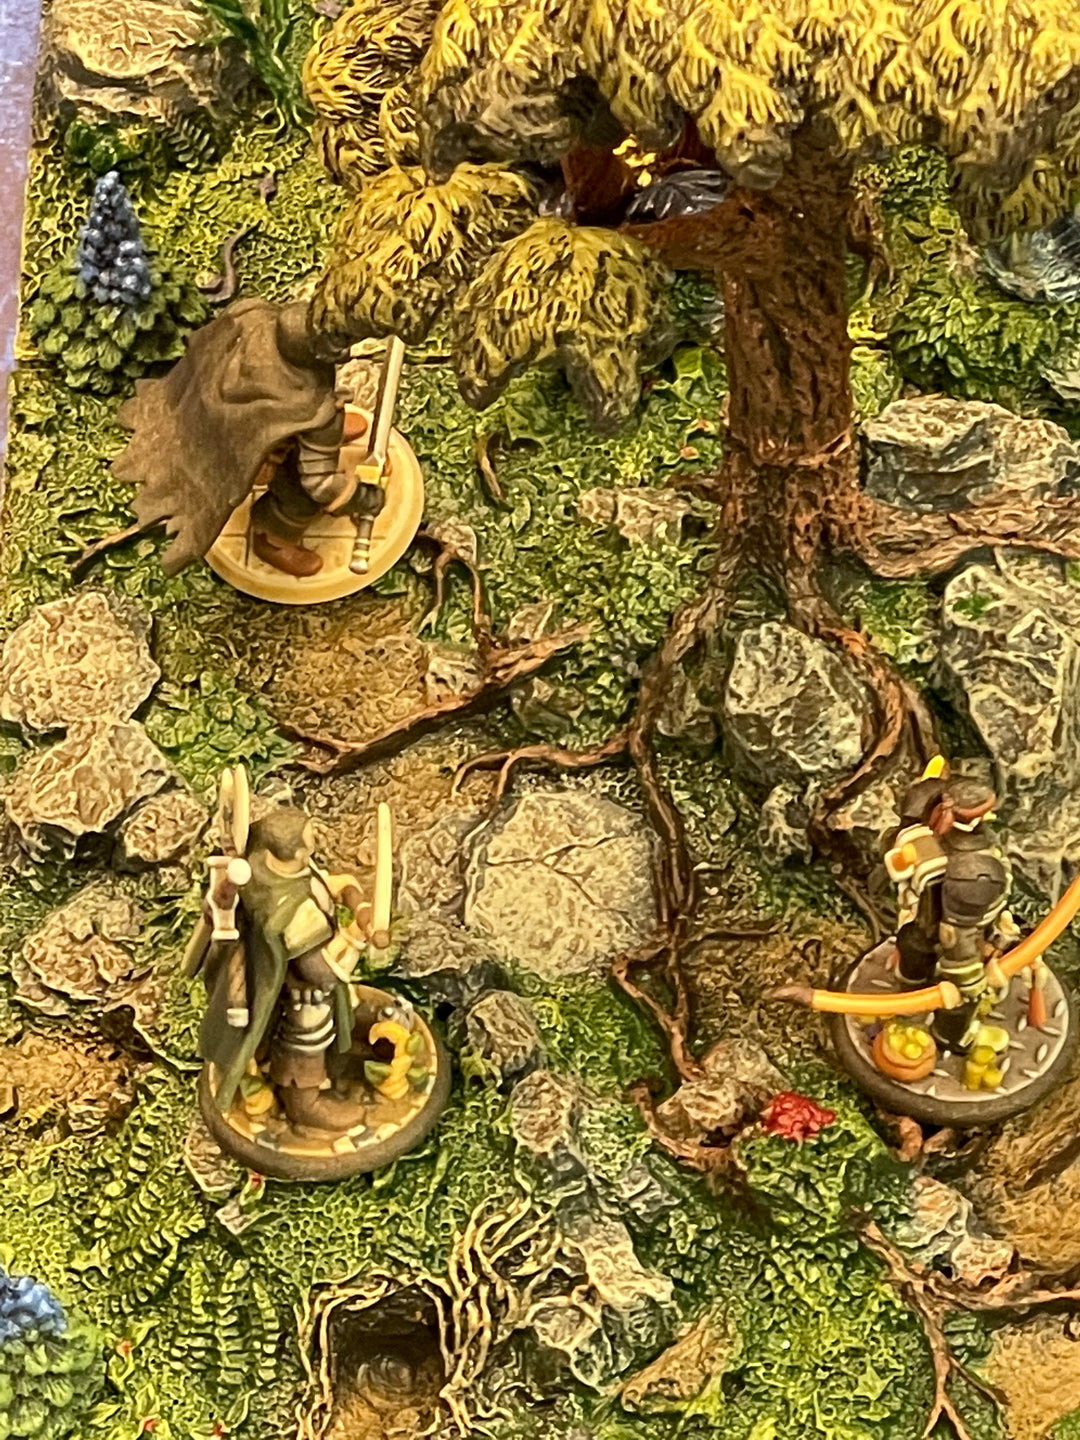 Talorien - Green Dragon Attack on the Wildlands